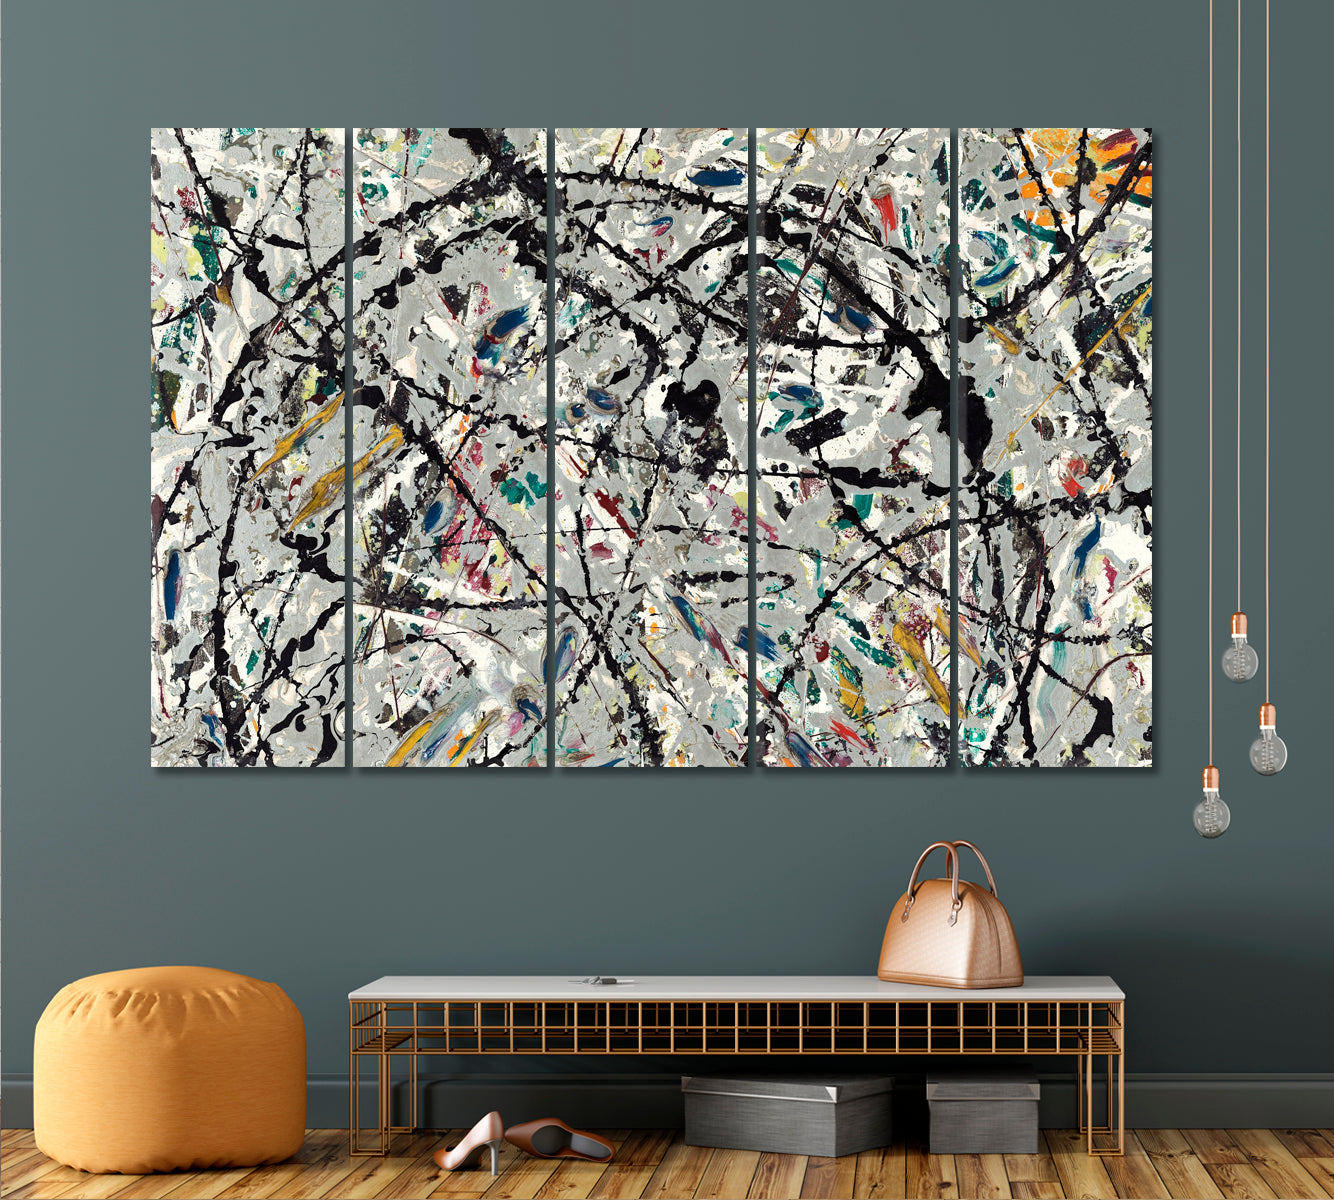 MODERN DRIP ART Jackson Pollock Motives Famous Splatter Artwork Contemporary Art Artesty 5 panels 36" x 24" 